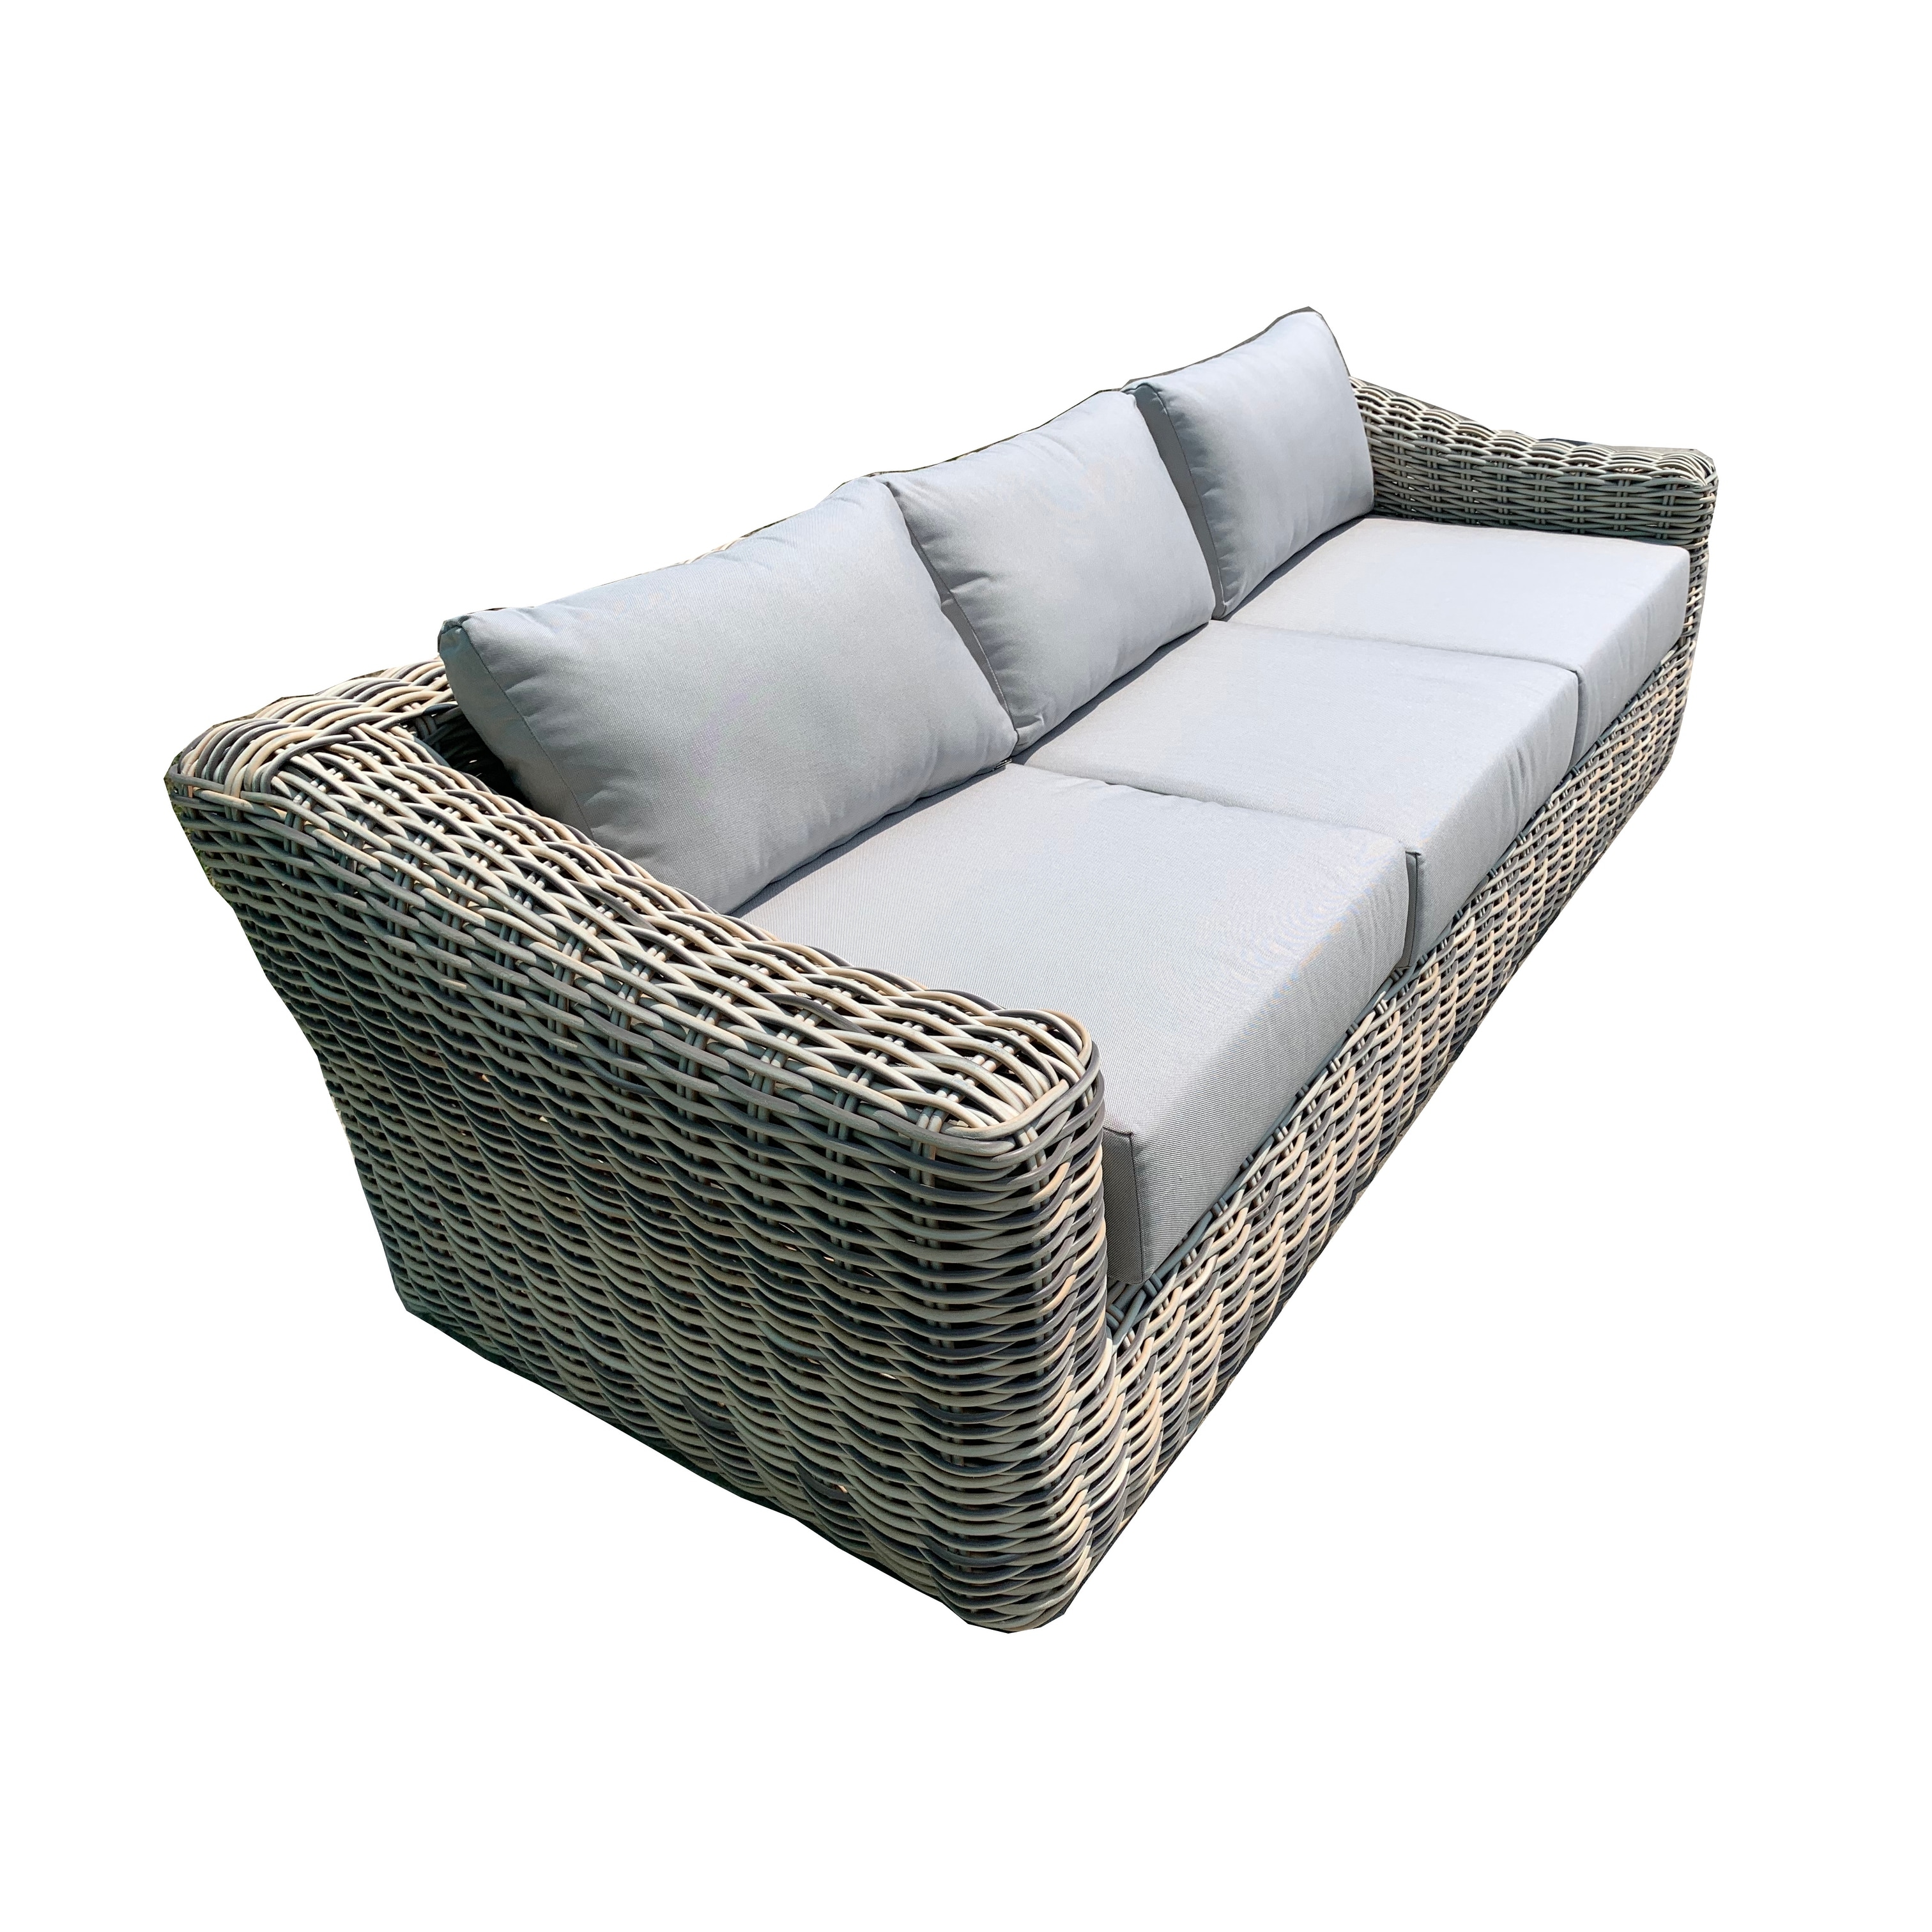 Hawaii Outdoor Patio Furniture Sofa Seating Durable Rattan Wicker Frame With Light Grey Olefin Cushions